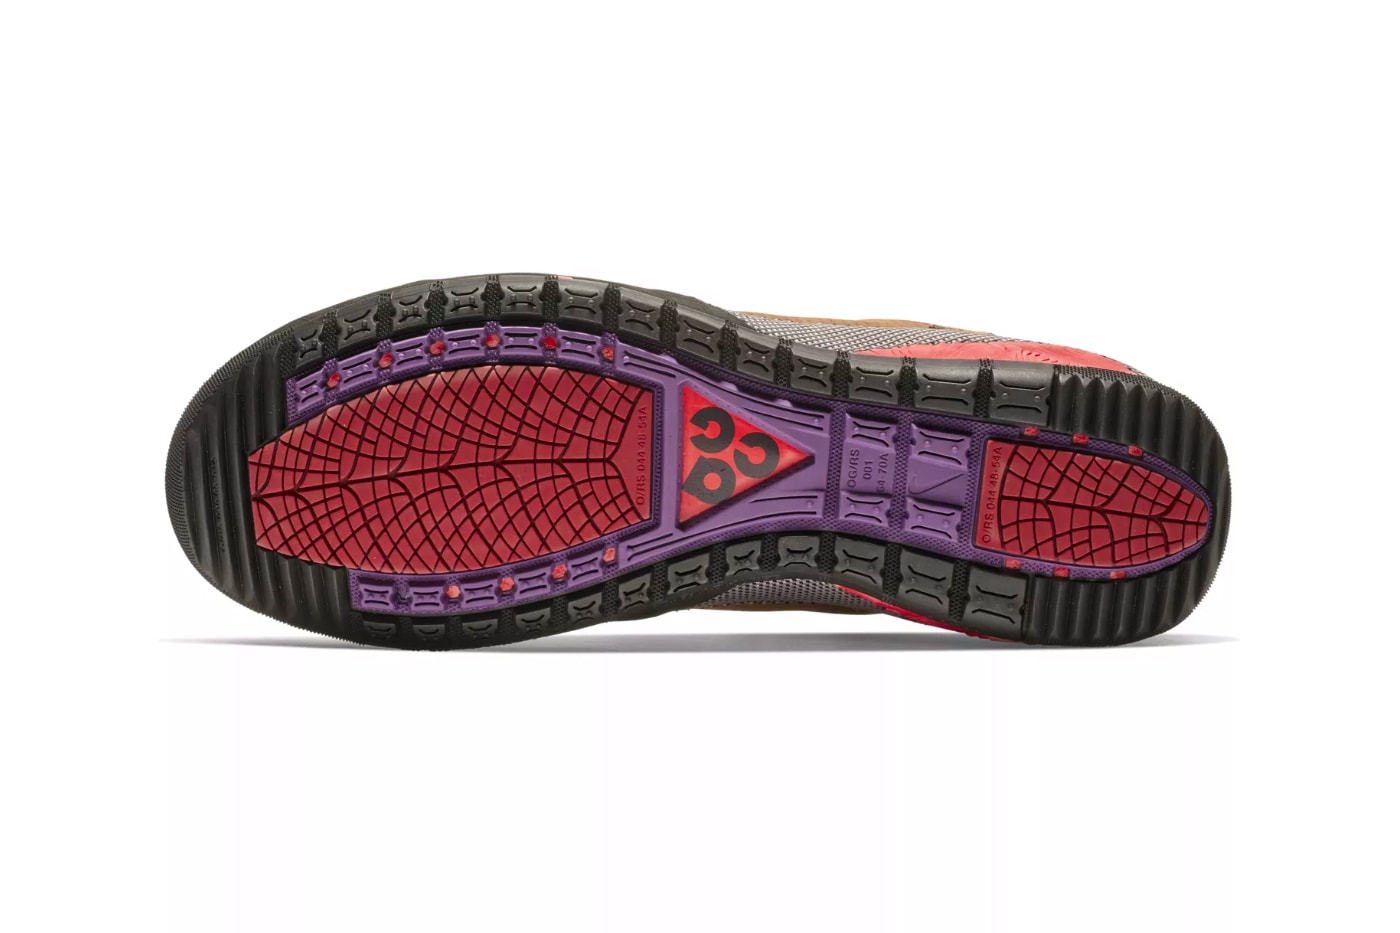 Nike ACG Ruckel Ridge "British Tan" Release Date info price boot tan colorway habanero red sneaker 